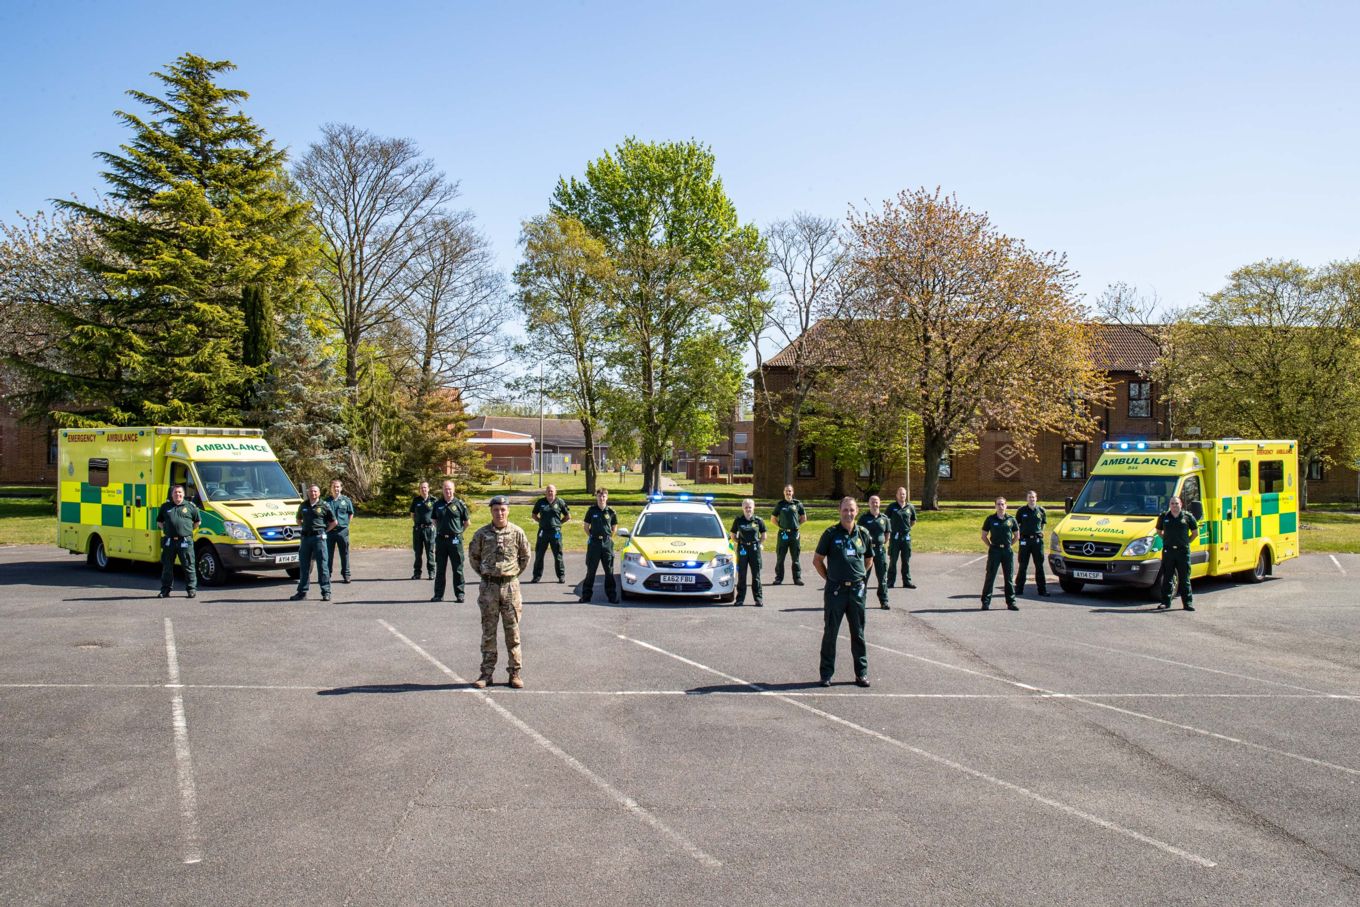 C0-Respondwer team on display with the ambulances